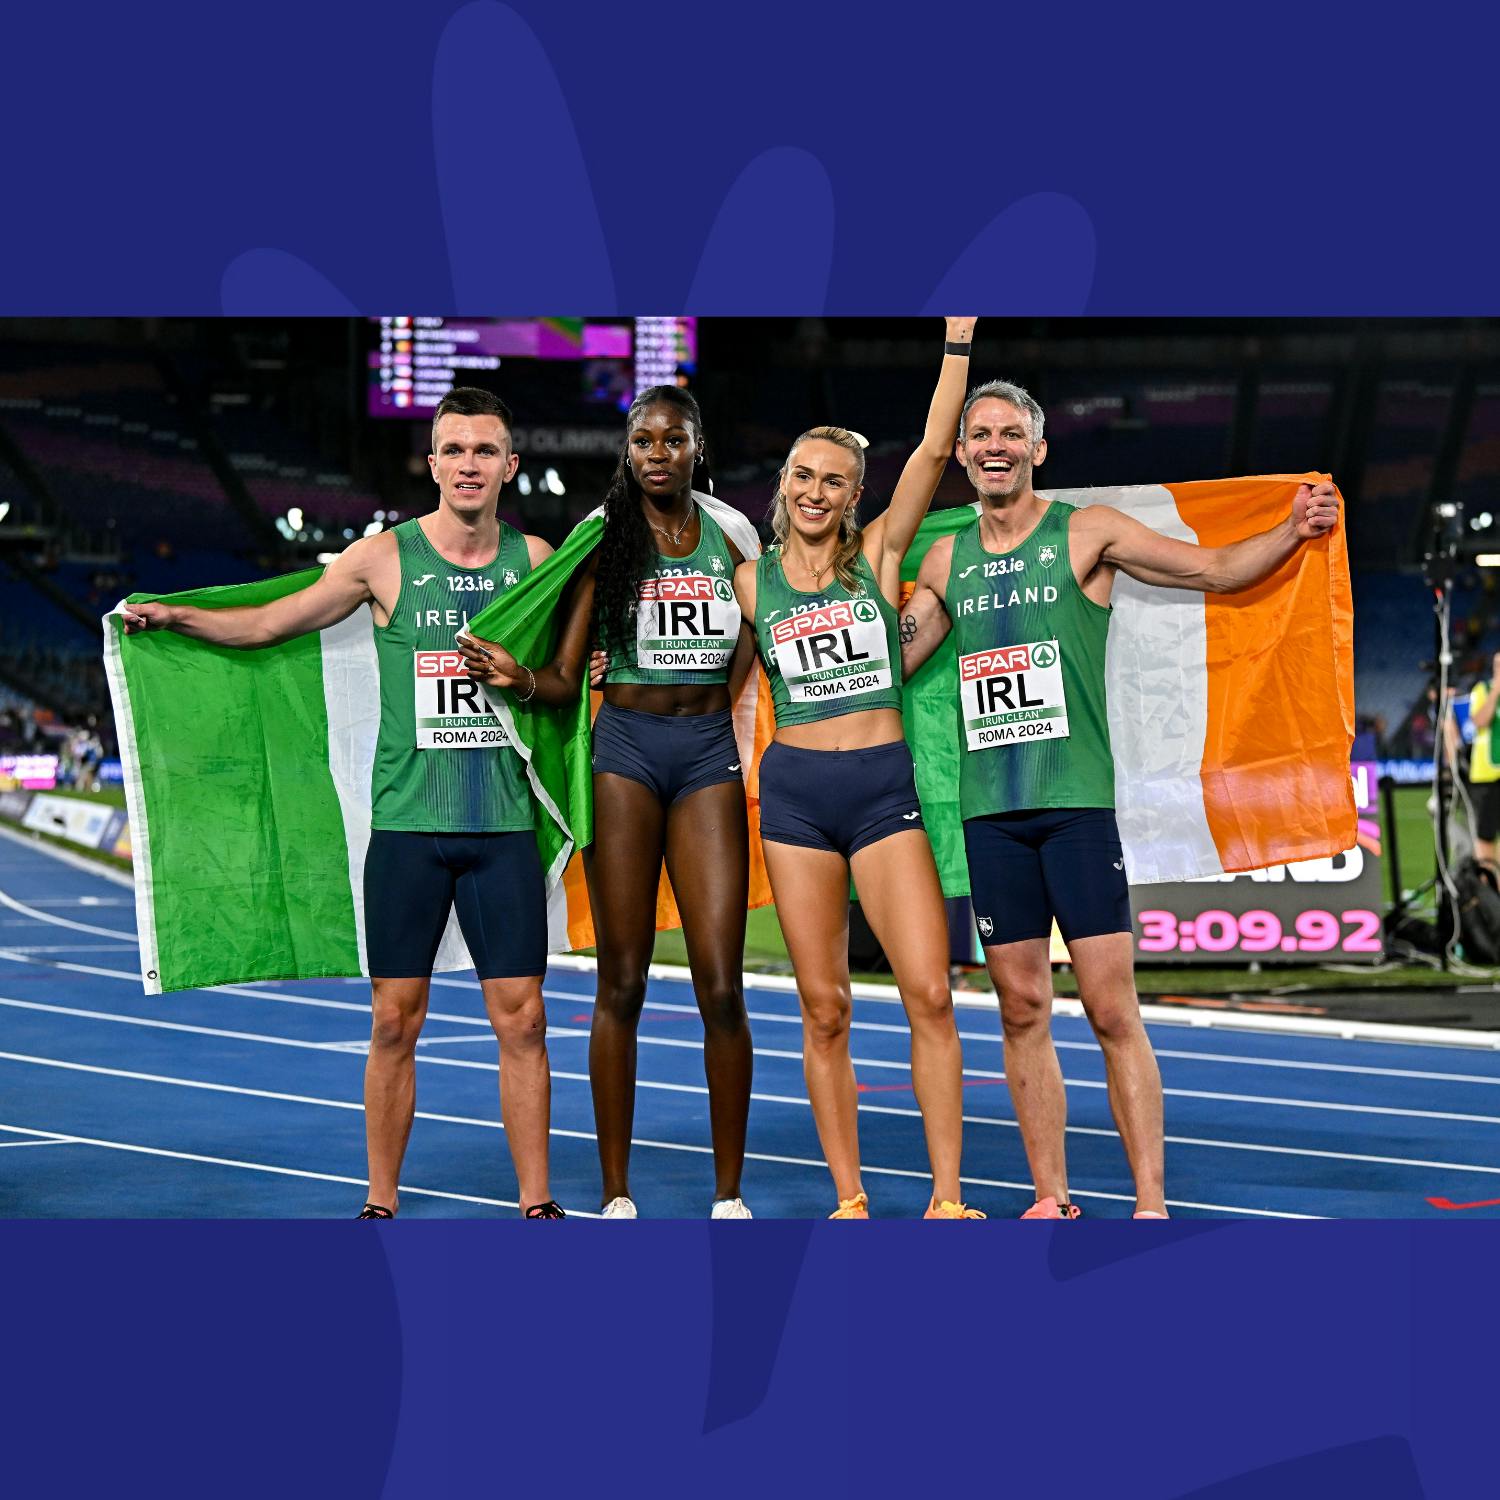 David Gillick On The Huge Interest That Irish Athletics Has Garnered